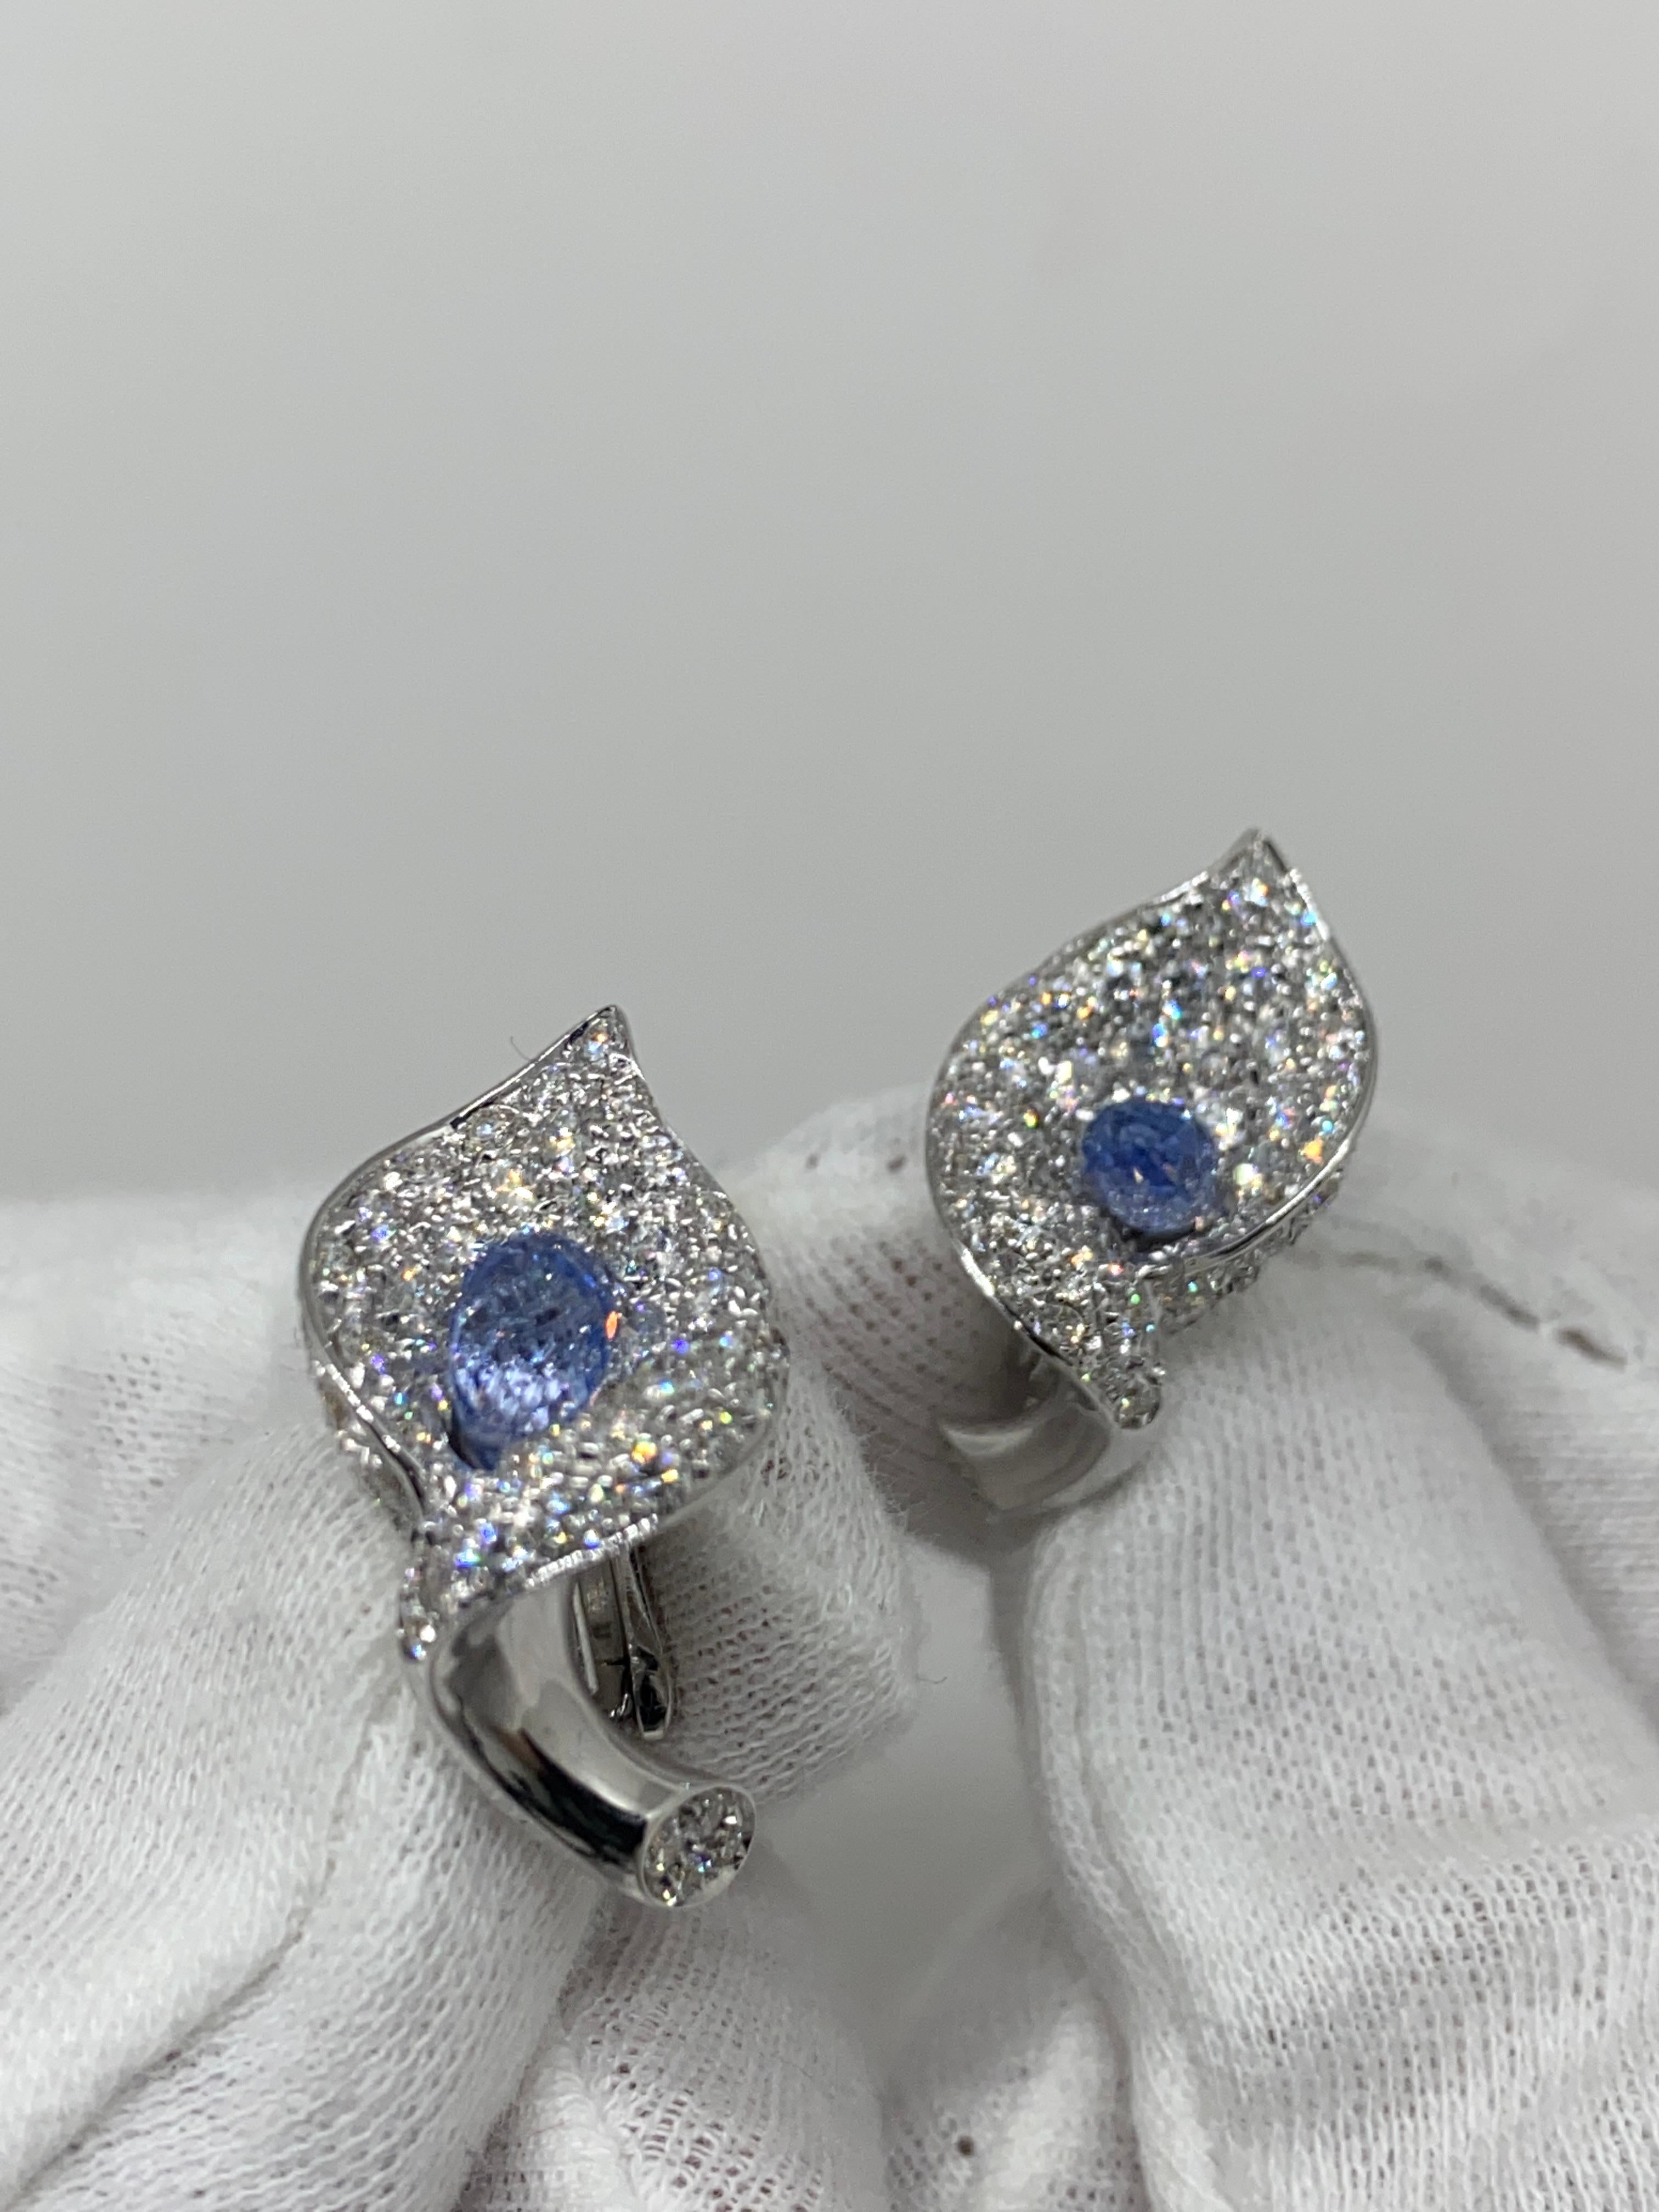 18 Karat White Gold Lobe Earrings 4.27 Ct Sapphires & 3.13 Ct White Diamonds For Sale 1